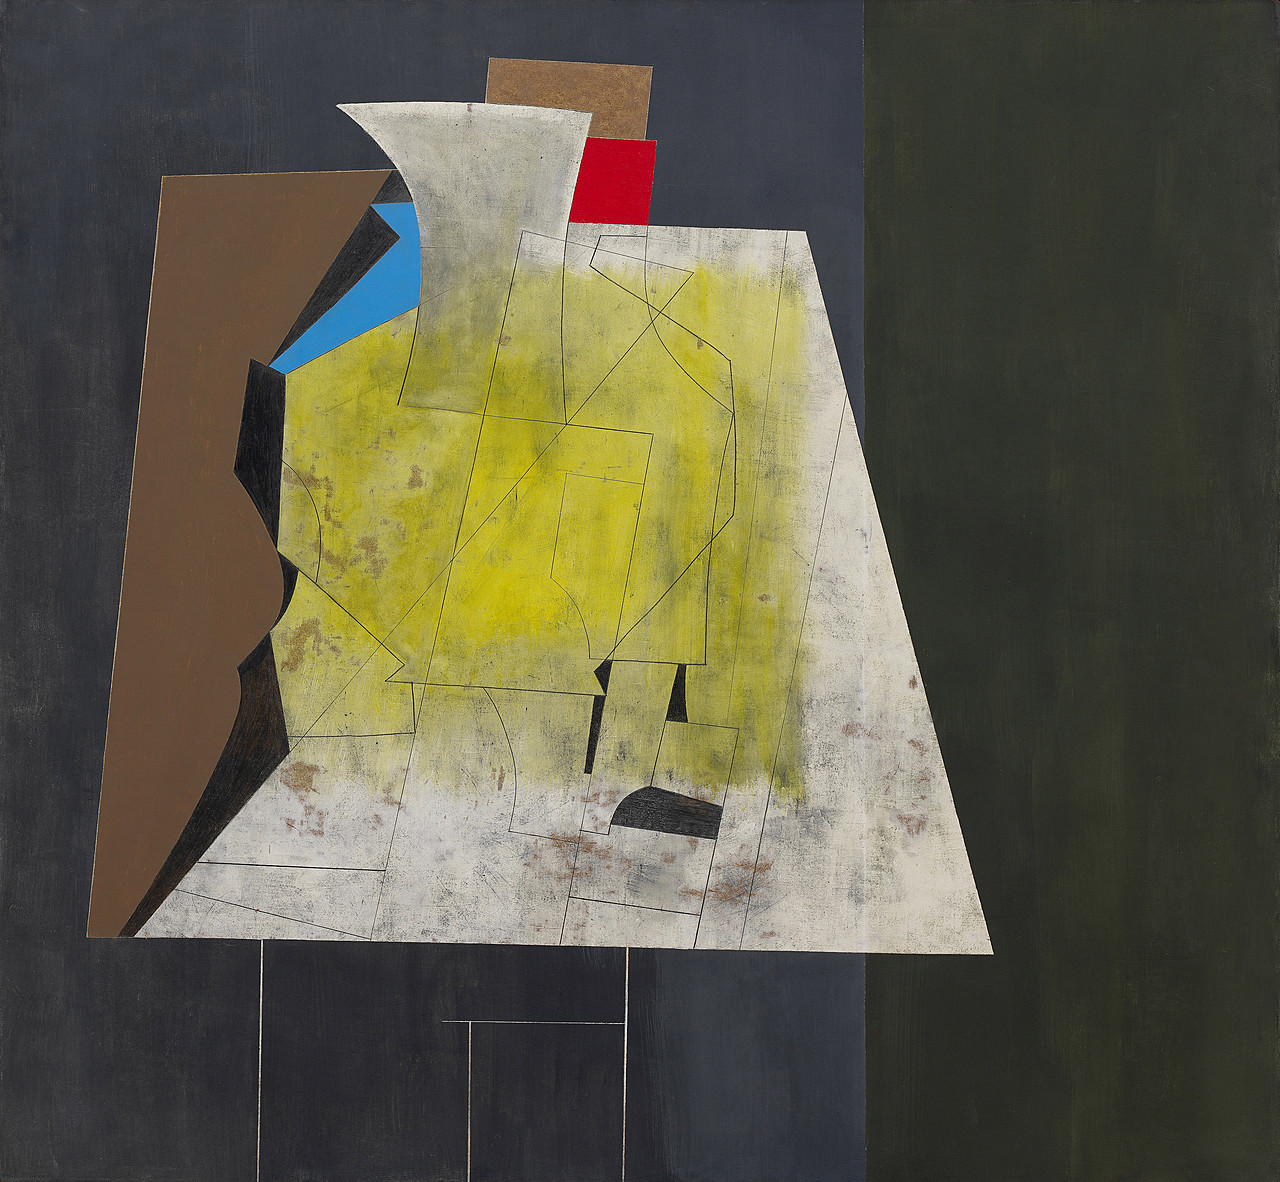 Ben Nicholson | The Guggenheim Museums and Foundation